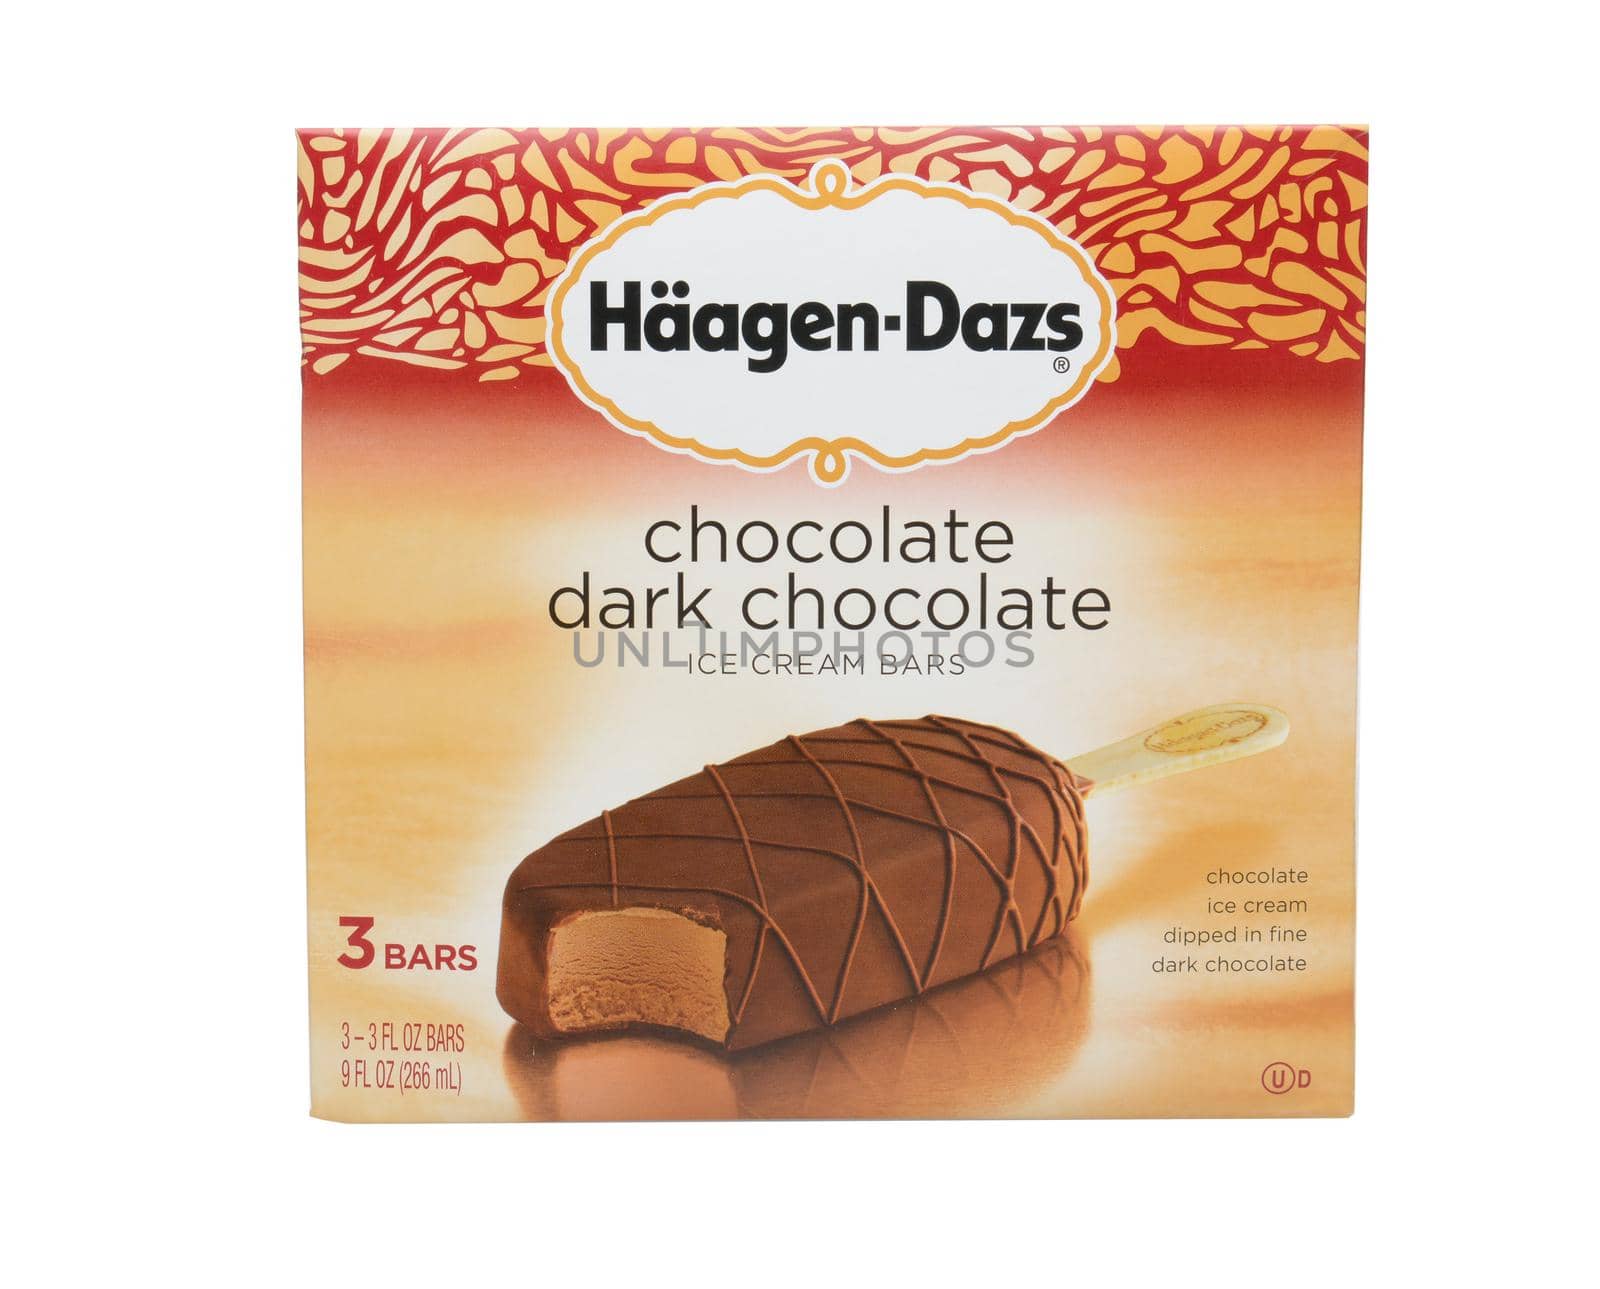 Haagen-Dazs Ice Cream Bars by sCukrov